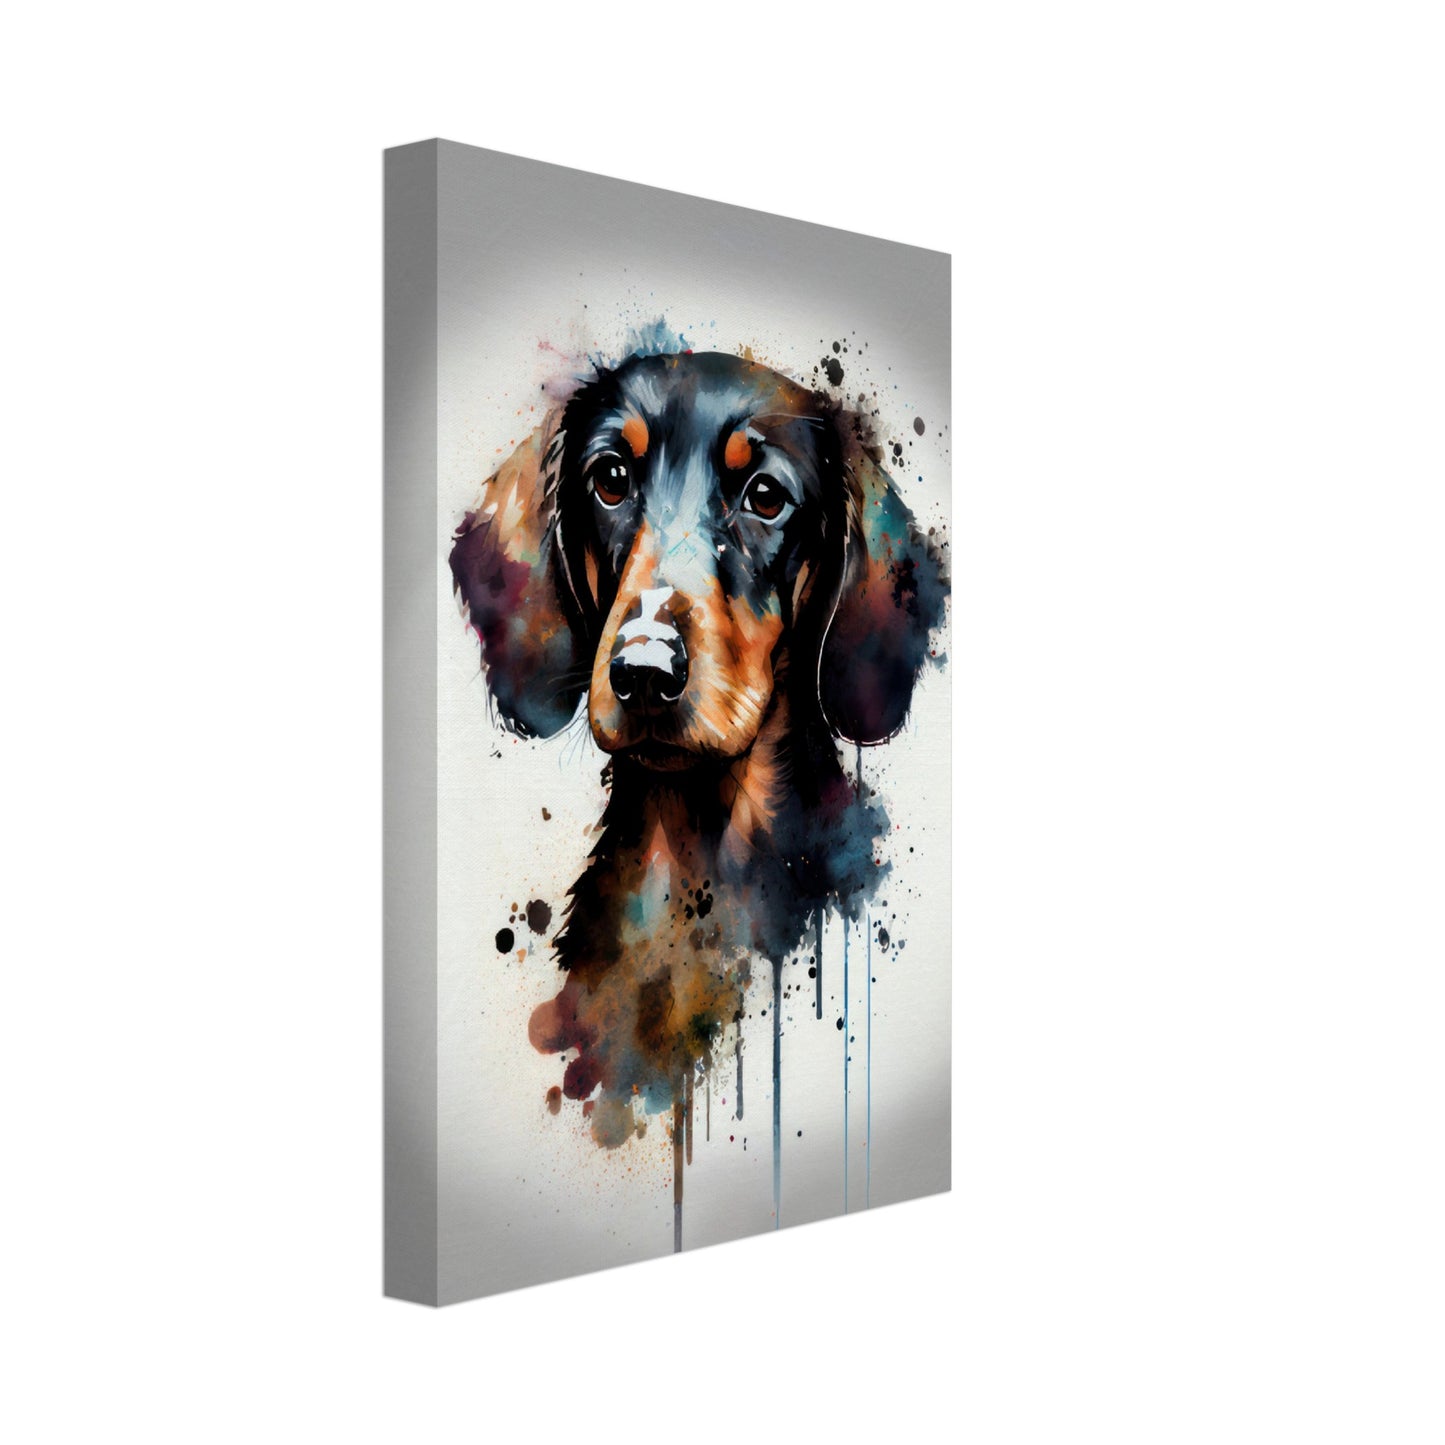 Dackel Teddy - Hunde Wandbild - Dogs Art Leinwand WaterColors im Hochformat - Hundebilder Hundeportrait Tiere Tierbilder Kunstdruck Aquarell